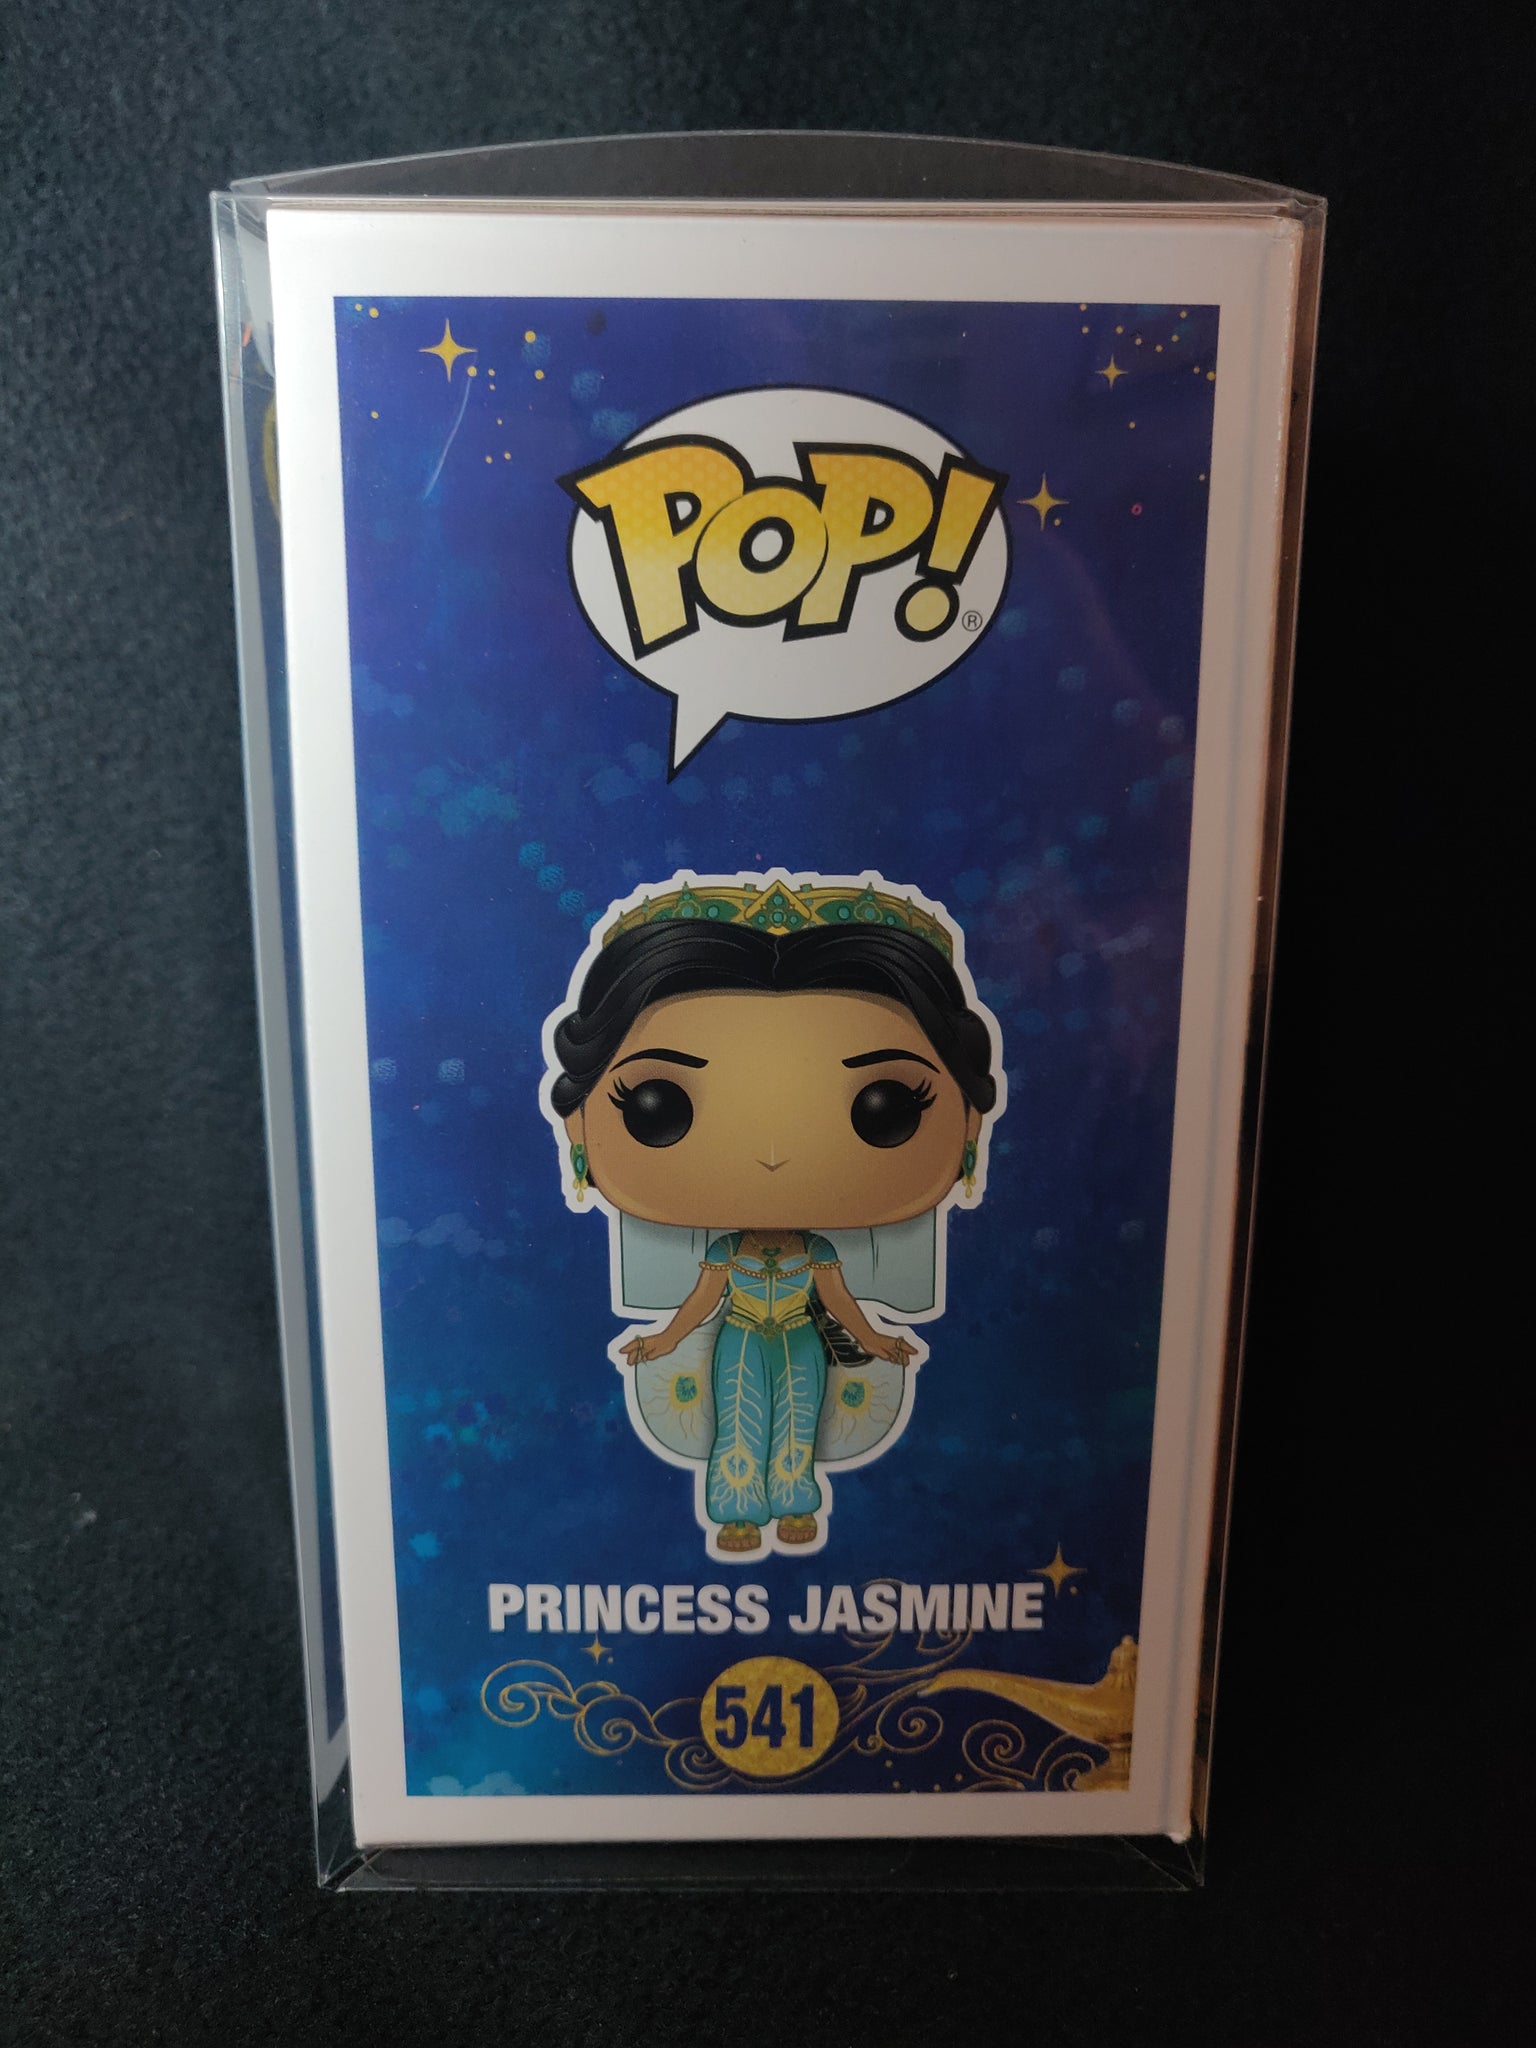 Aladdin - Princess Jasmine Diamond Collection - POP! Disney action figure  541